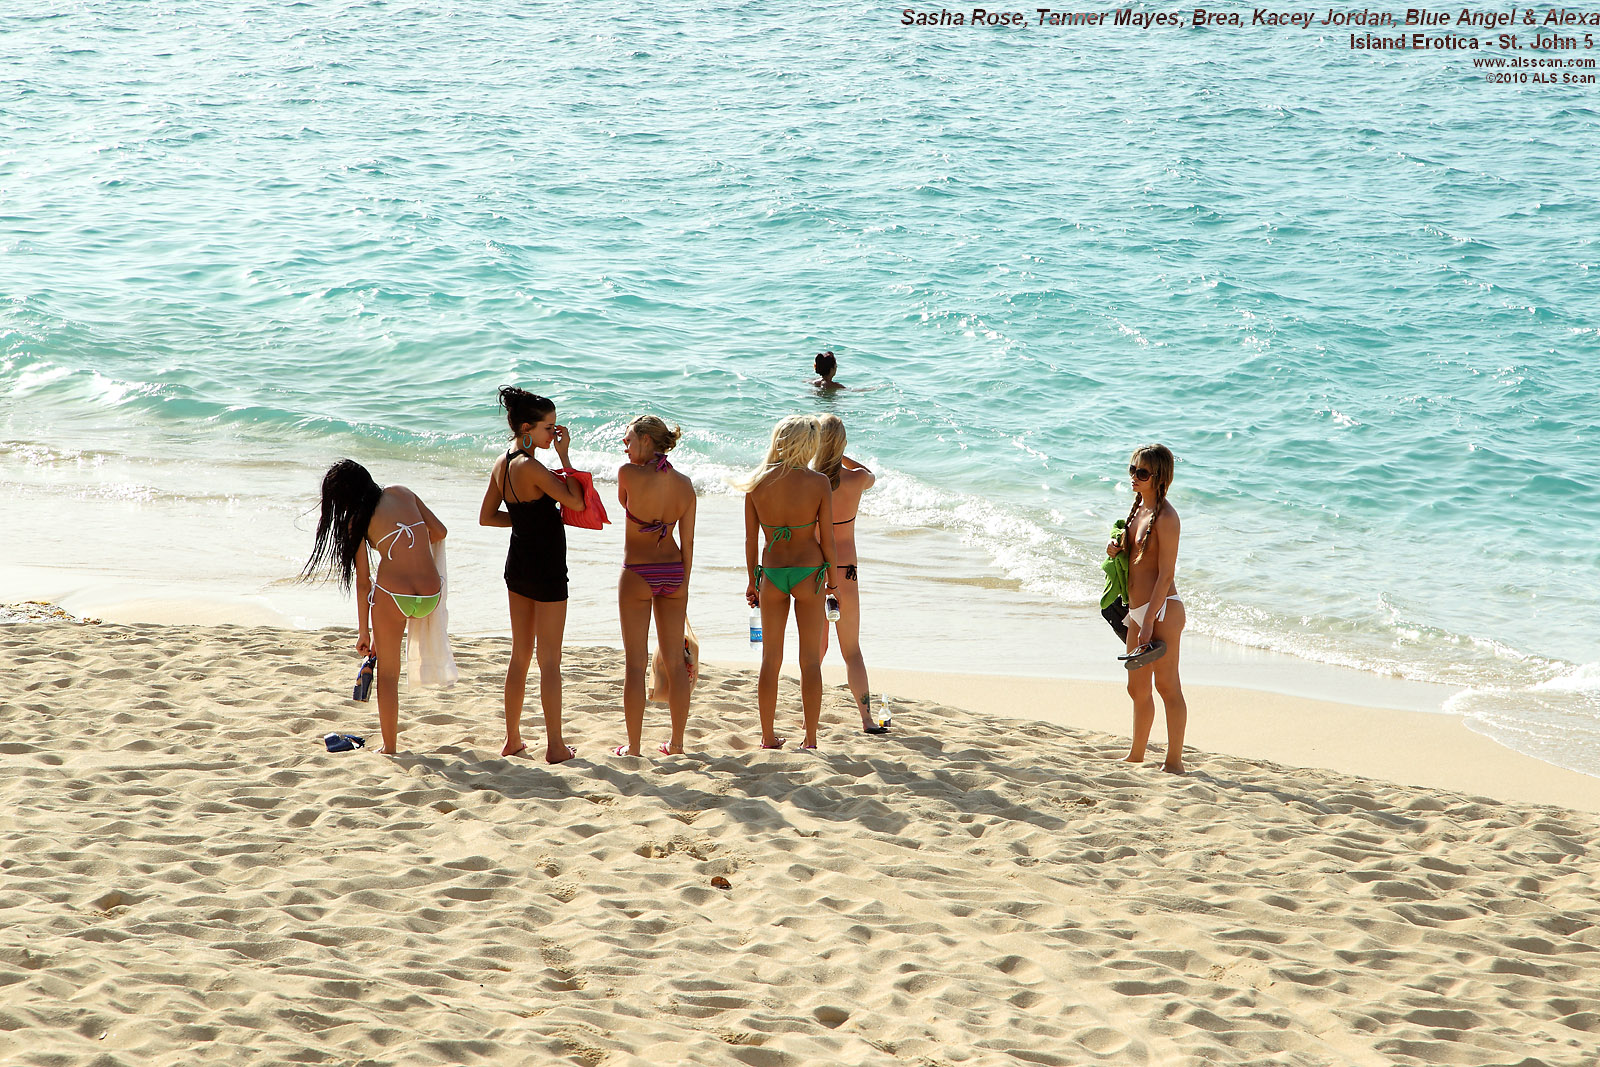 Group Shots » Island Erotica Als Scan » ALS Scan » Free Nude Pictures @ Bravo Erotica Free Nude Pictures